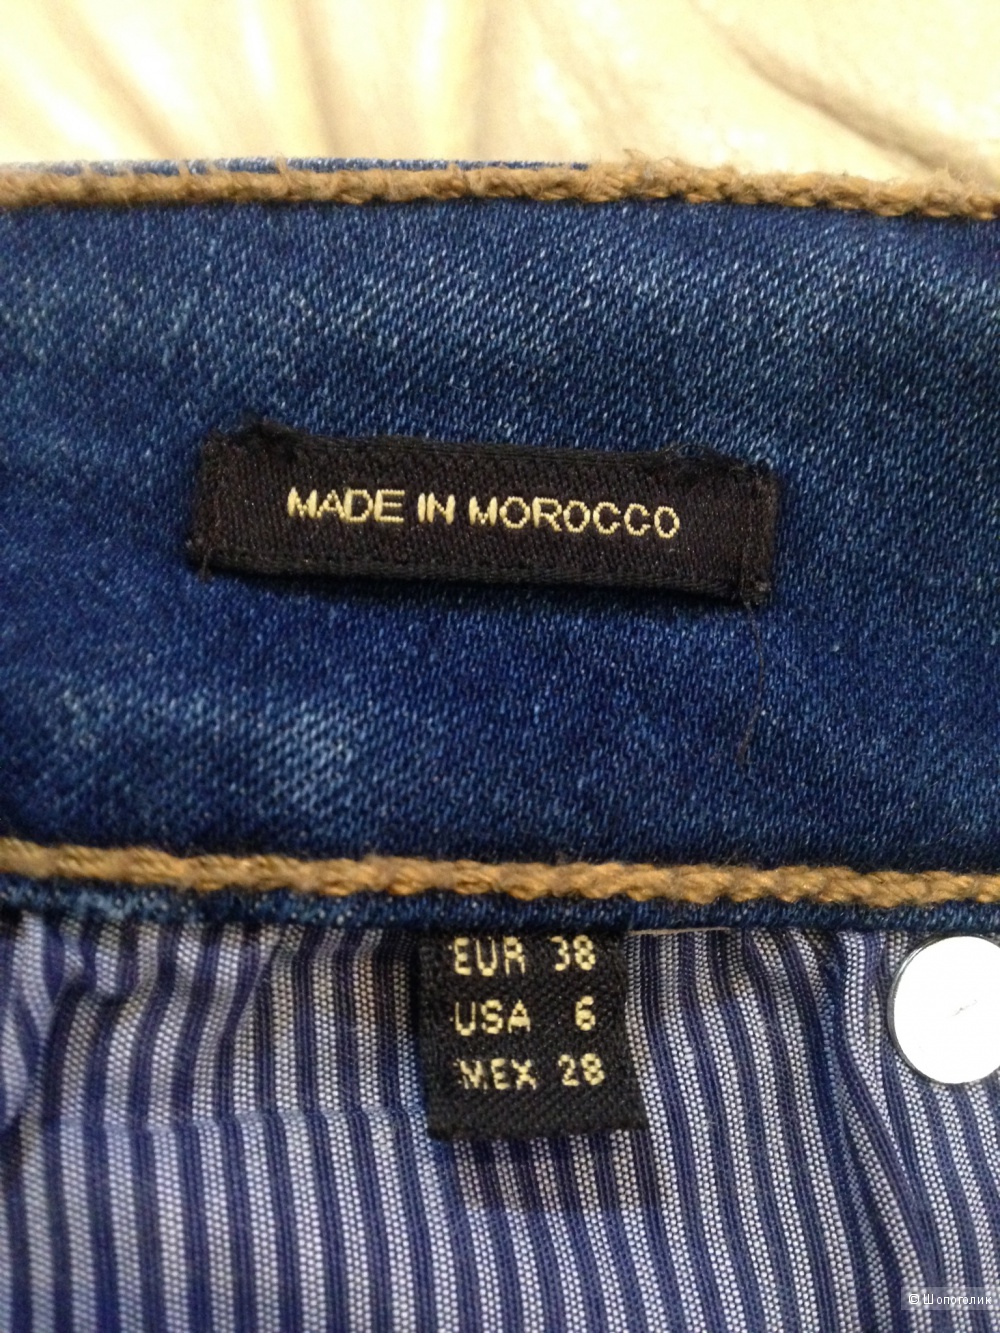 Юбка джинсовая Massimo Dutti размер USA 6 ЕUR 38